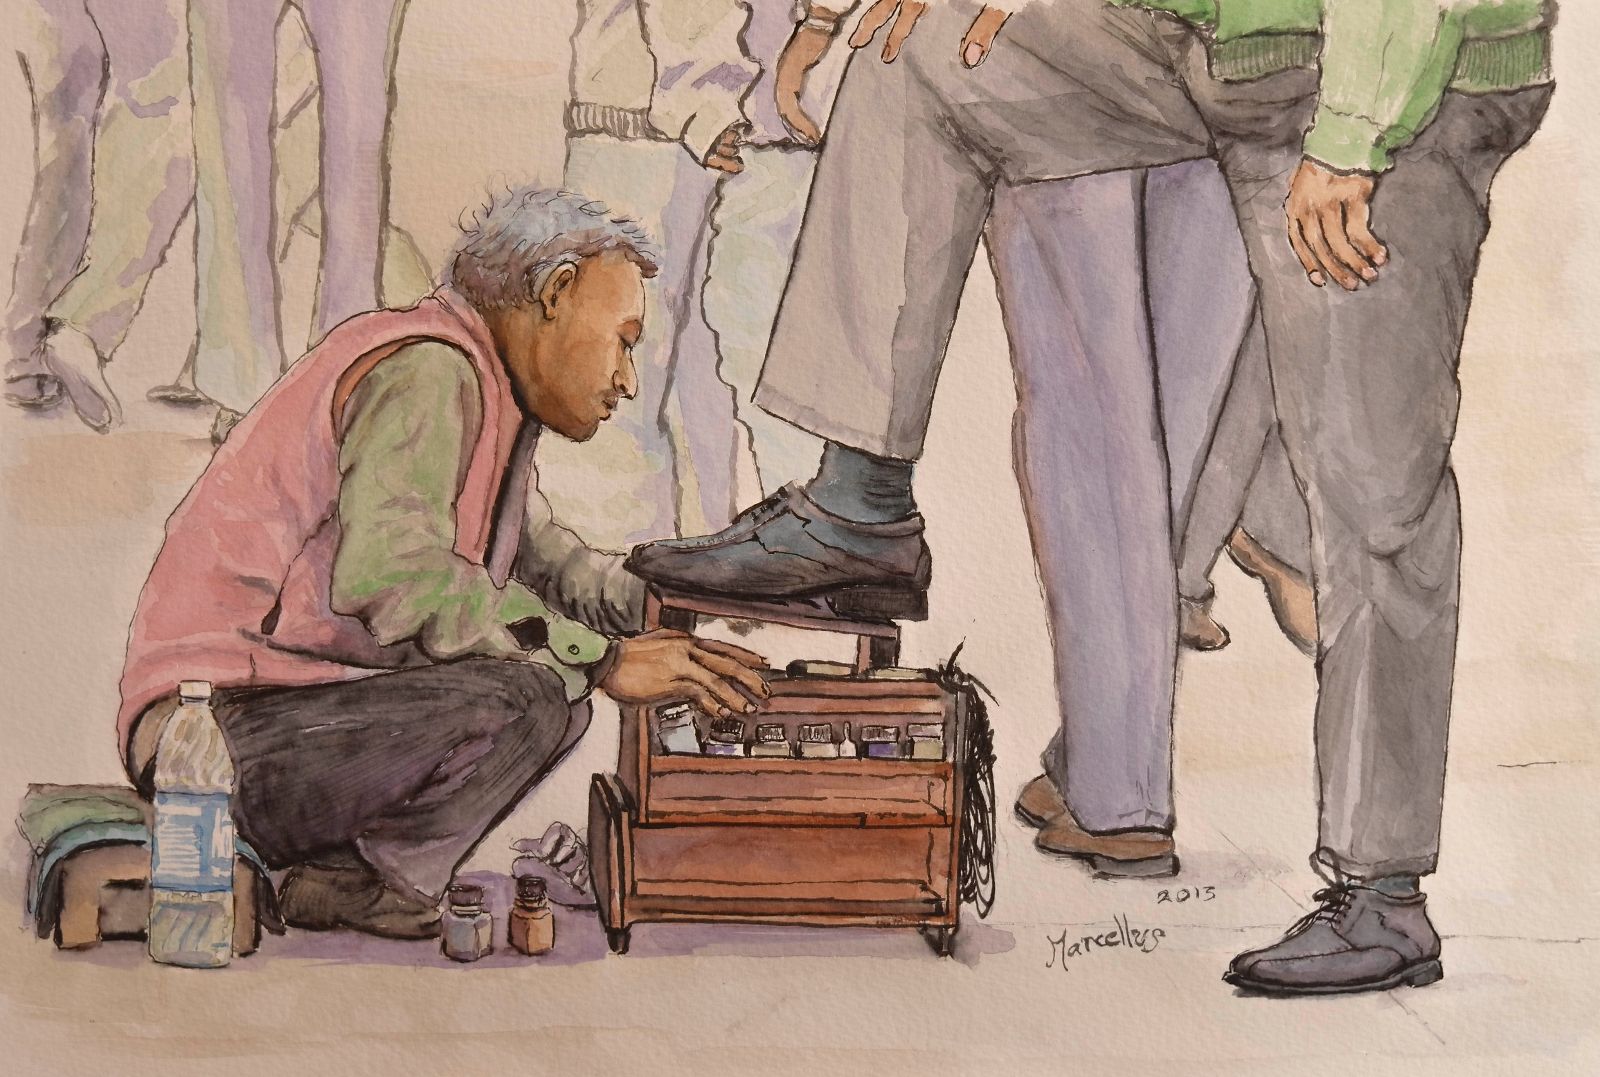 2. the shoeshine guy